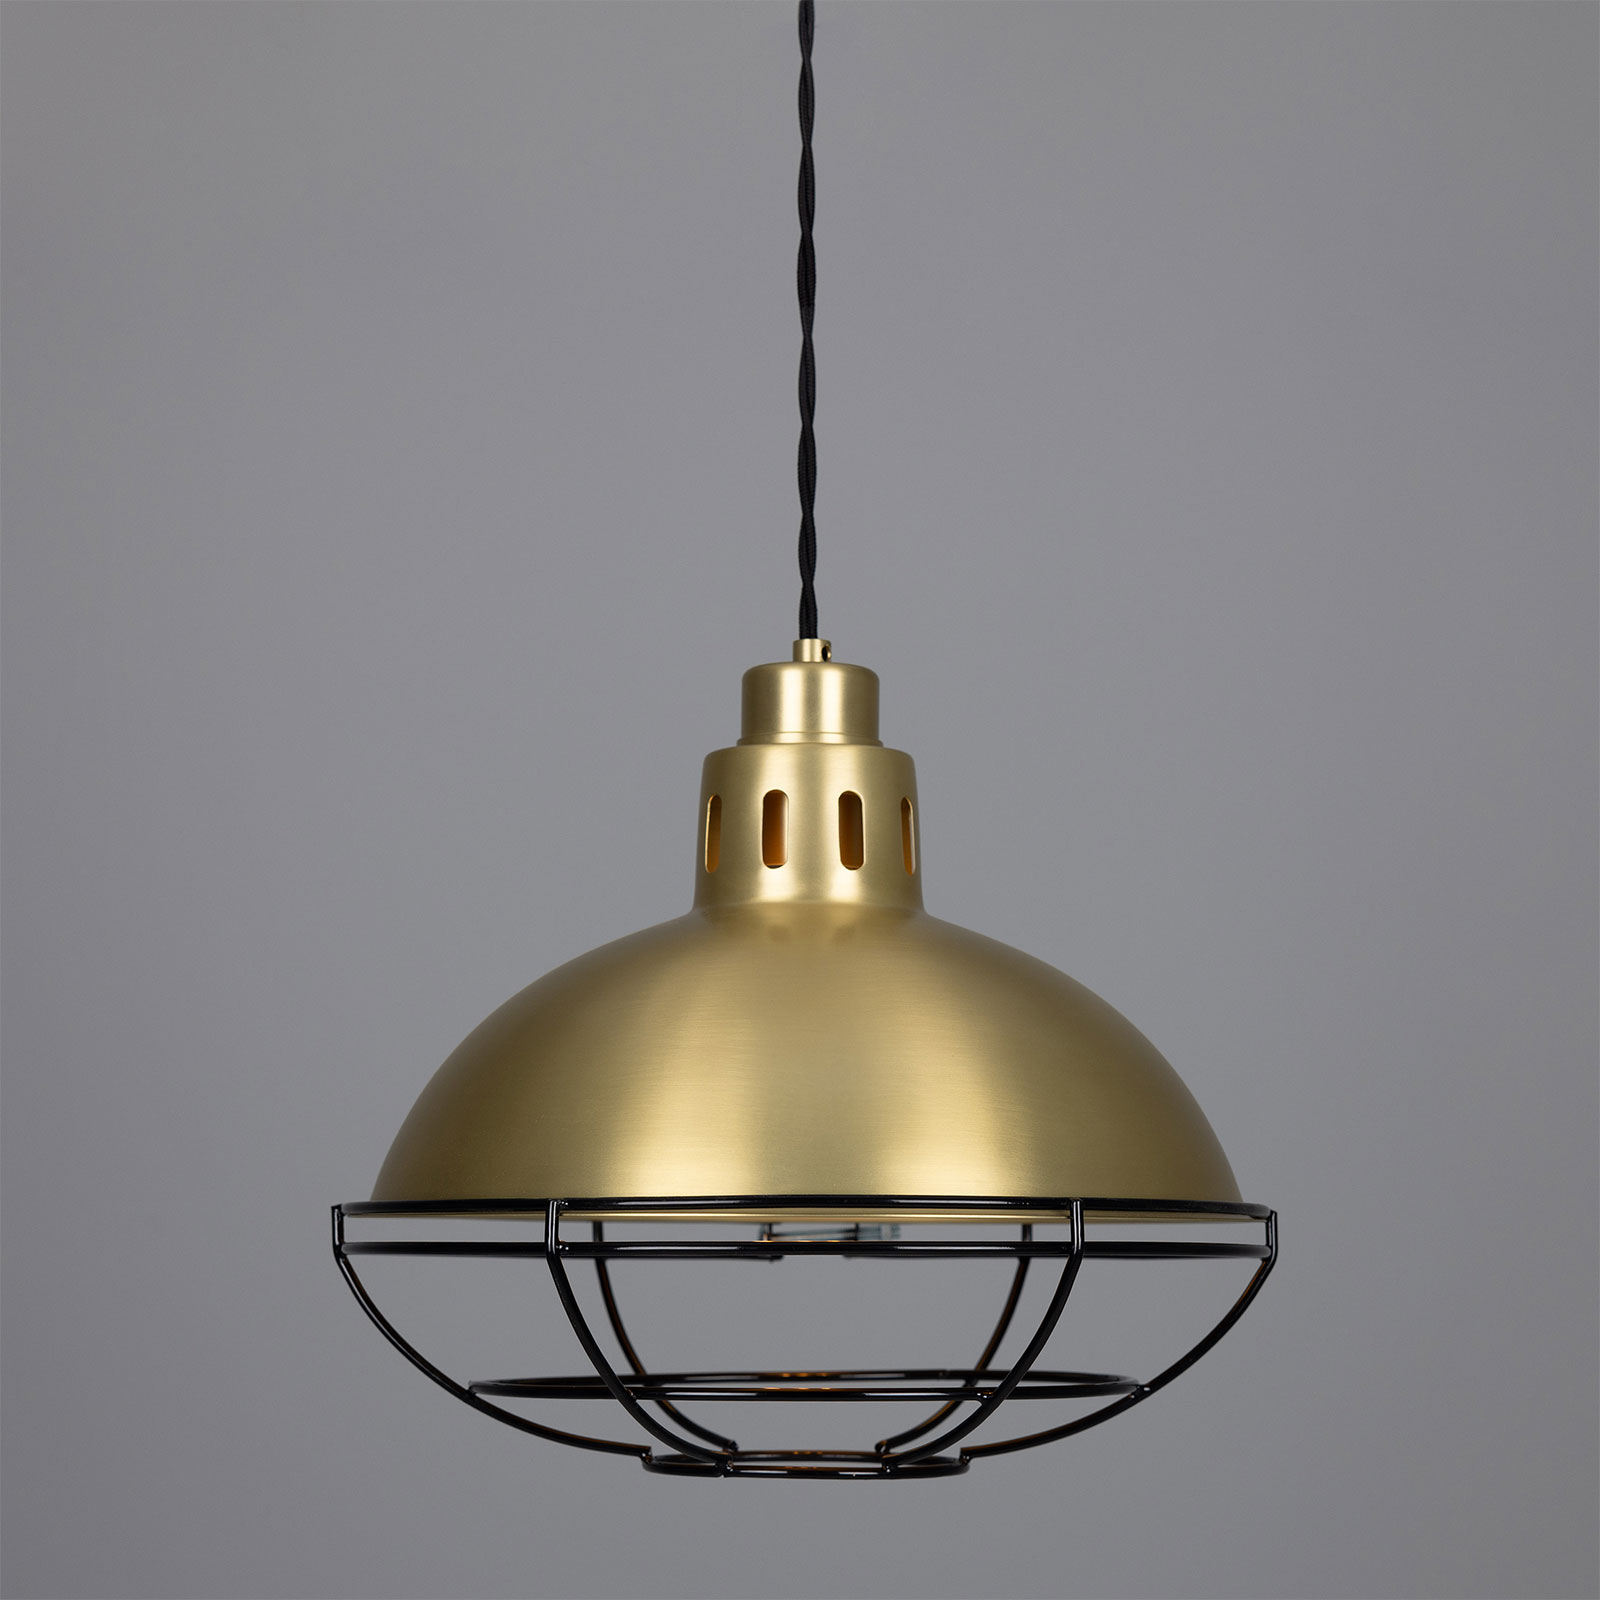 Klassische Fabriklampe aus Messing mit Schutzgitter-Käfig, 32 cm: Messing matt satiniert